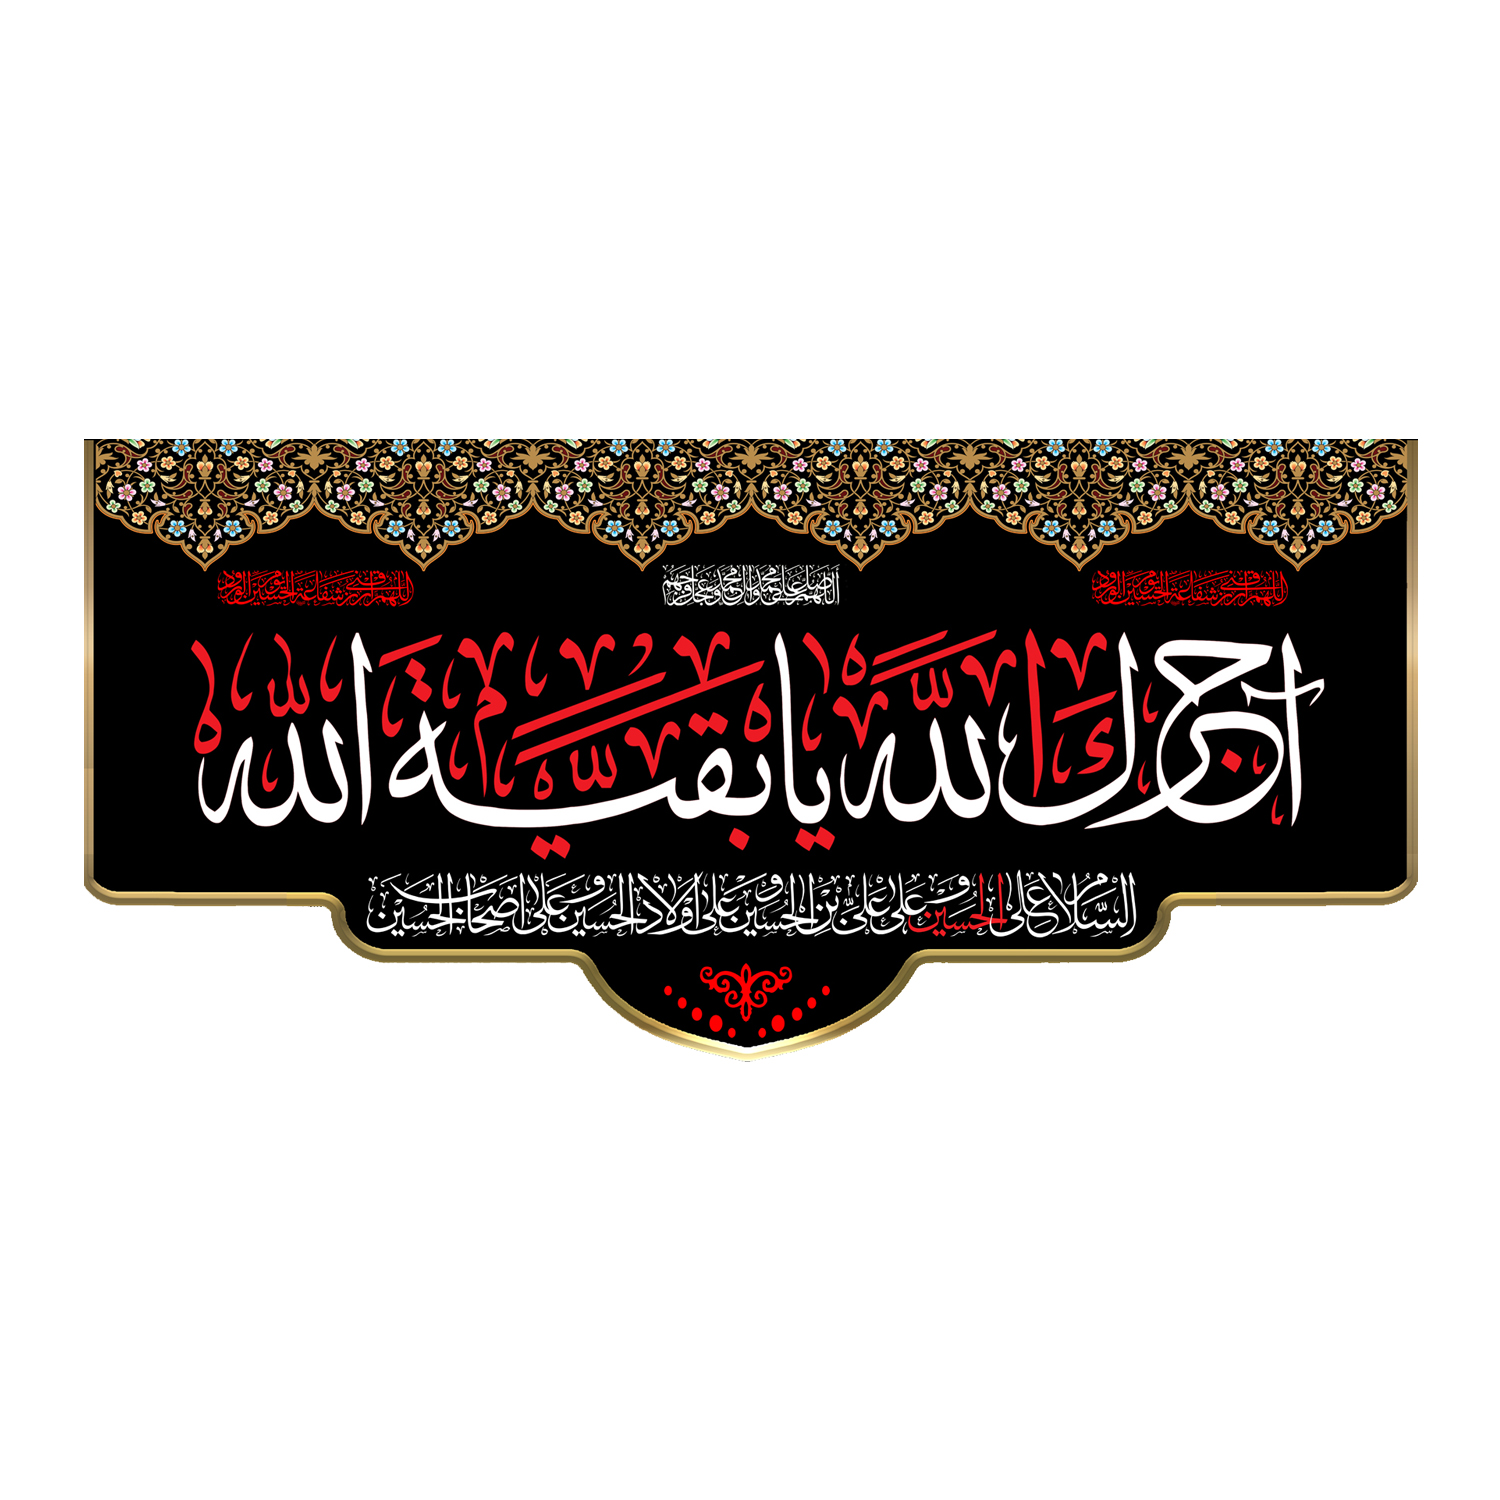 پرچم مدل آجرک الله یا صاحب الزمان کد 500079-14065